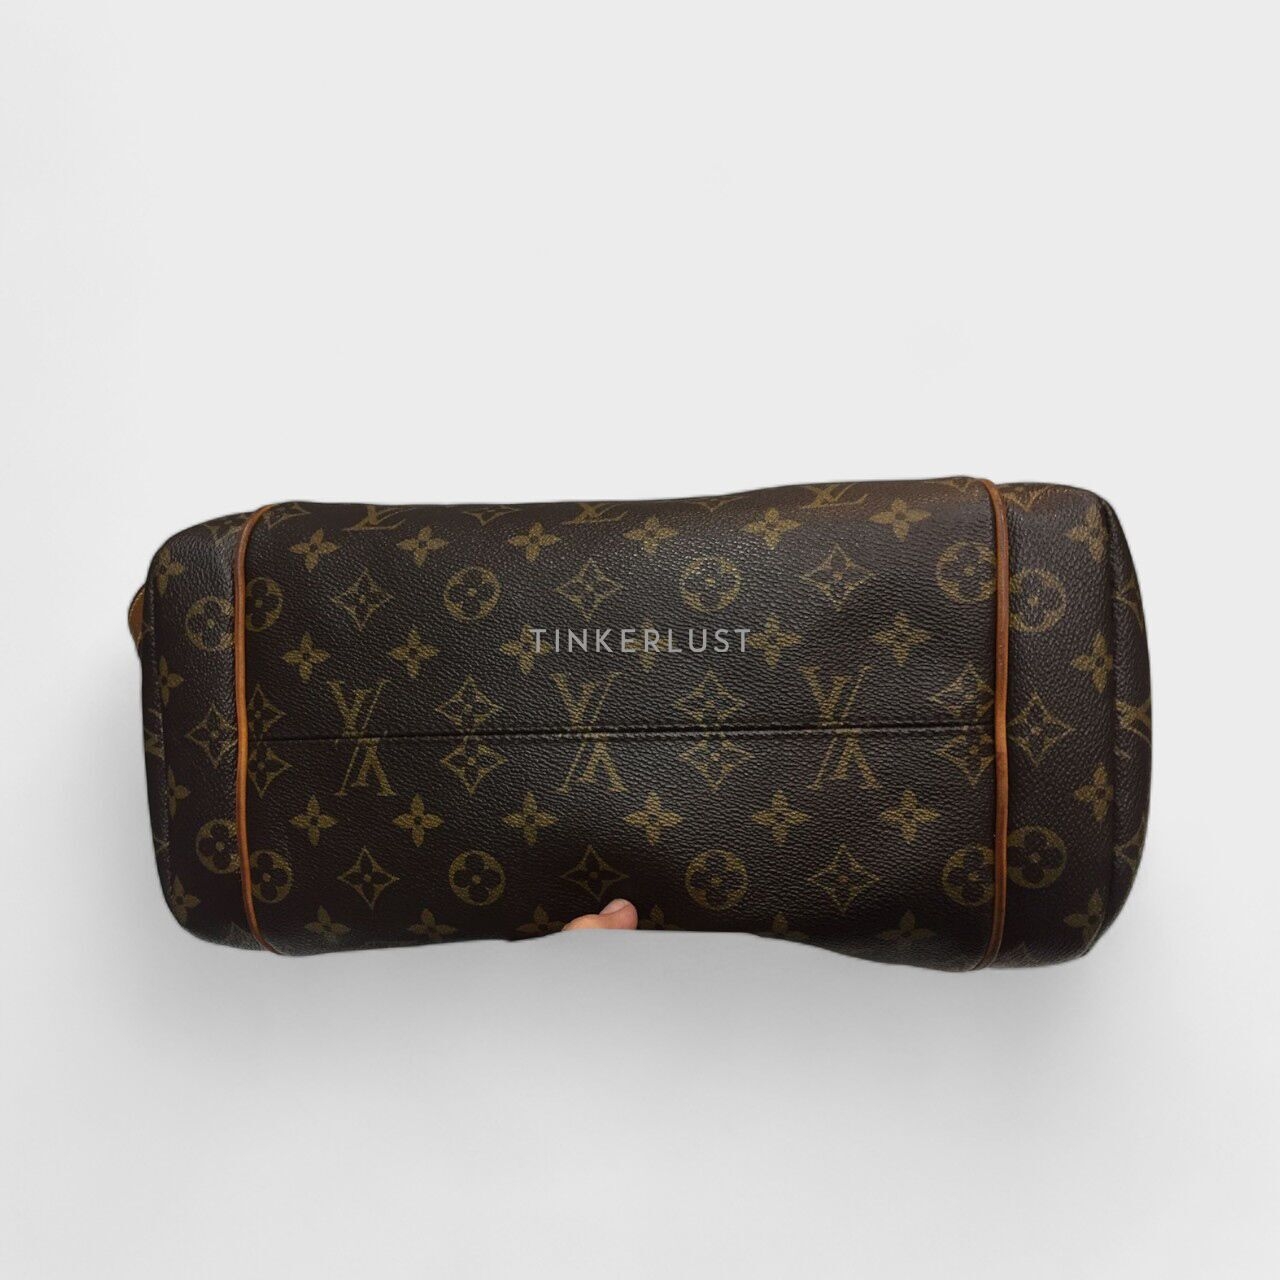 Louis Vuitton Totally MM Monogram 2013 Tote Bag